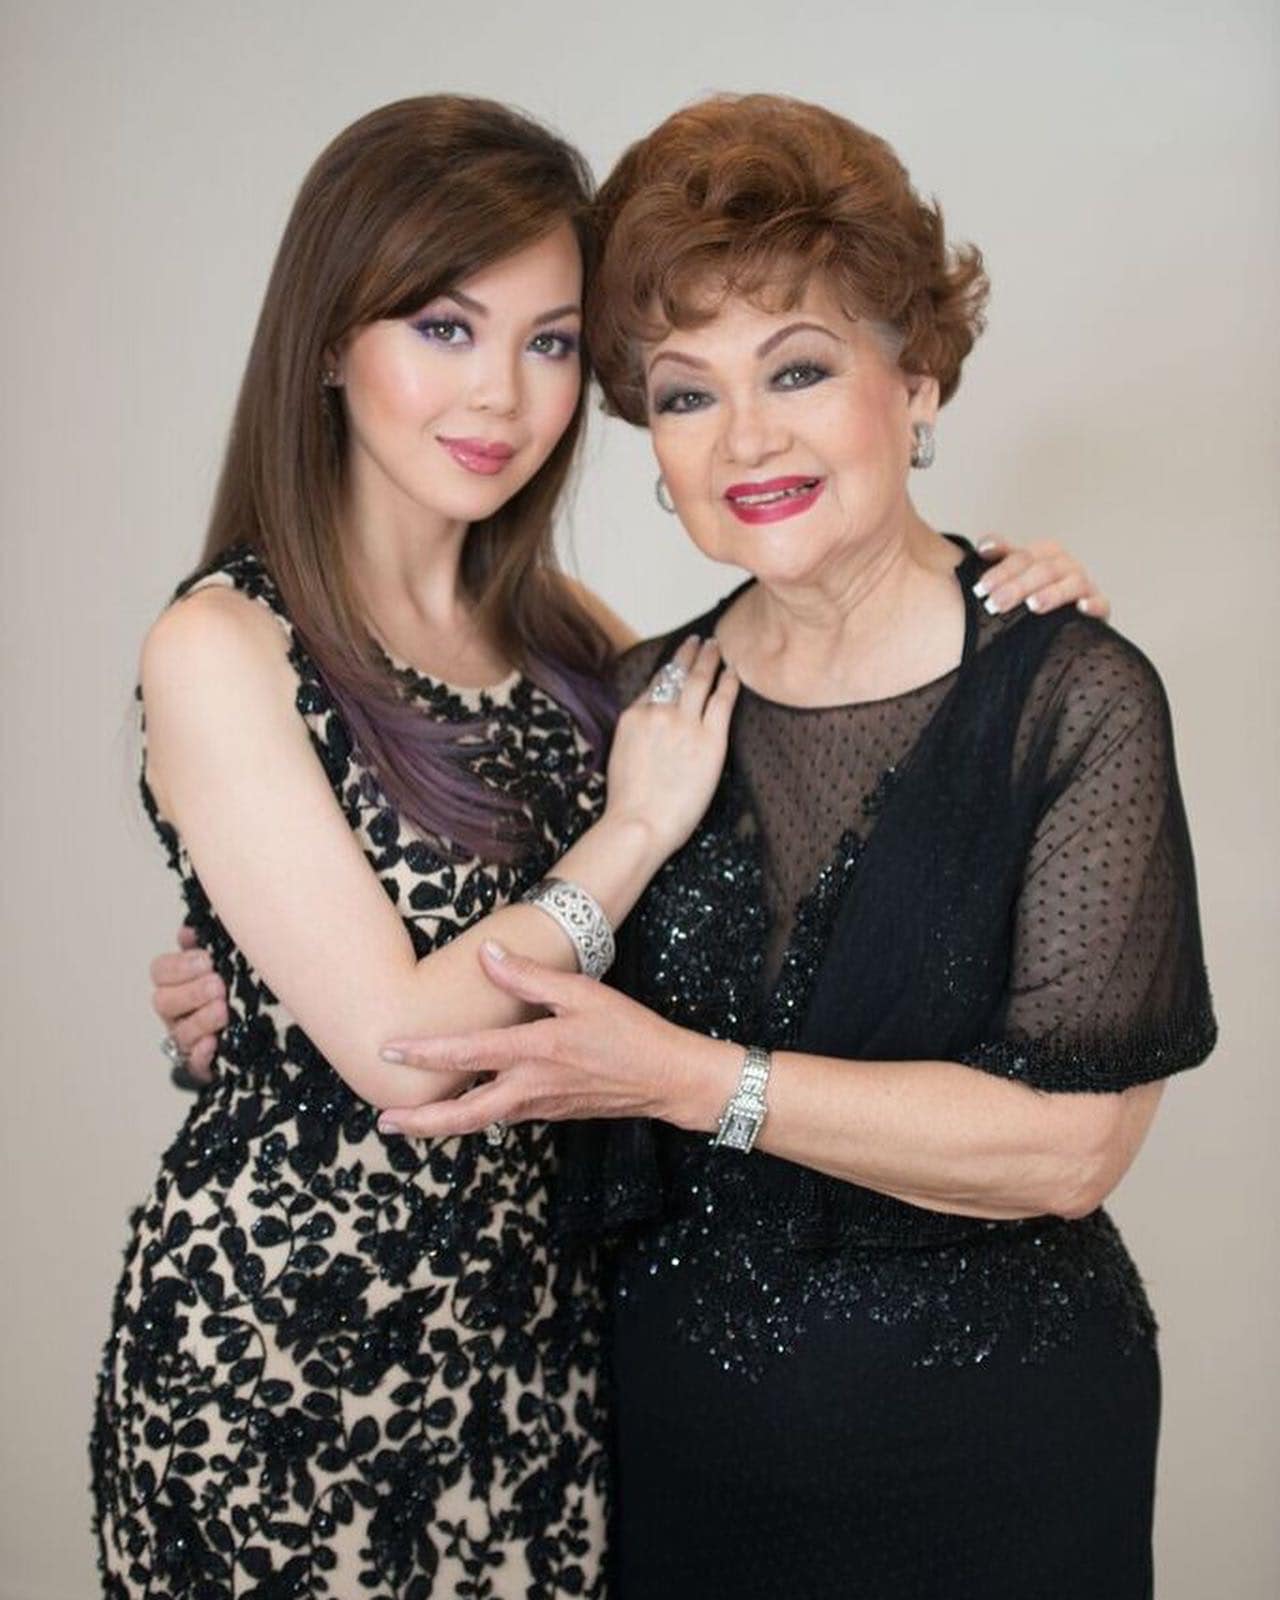 Sylvia La Torre and her granddaughter, Anna Maria Pérez de Tagle